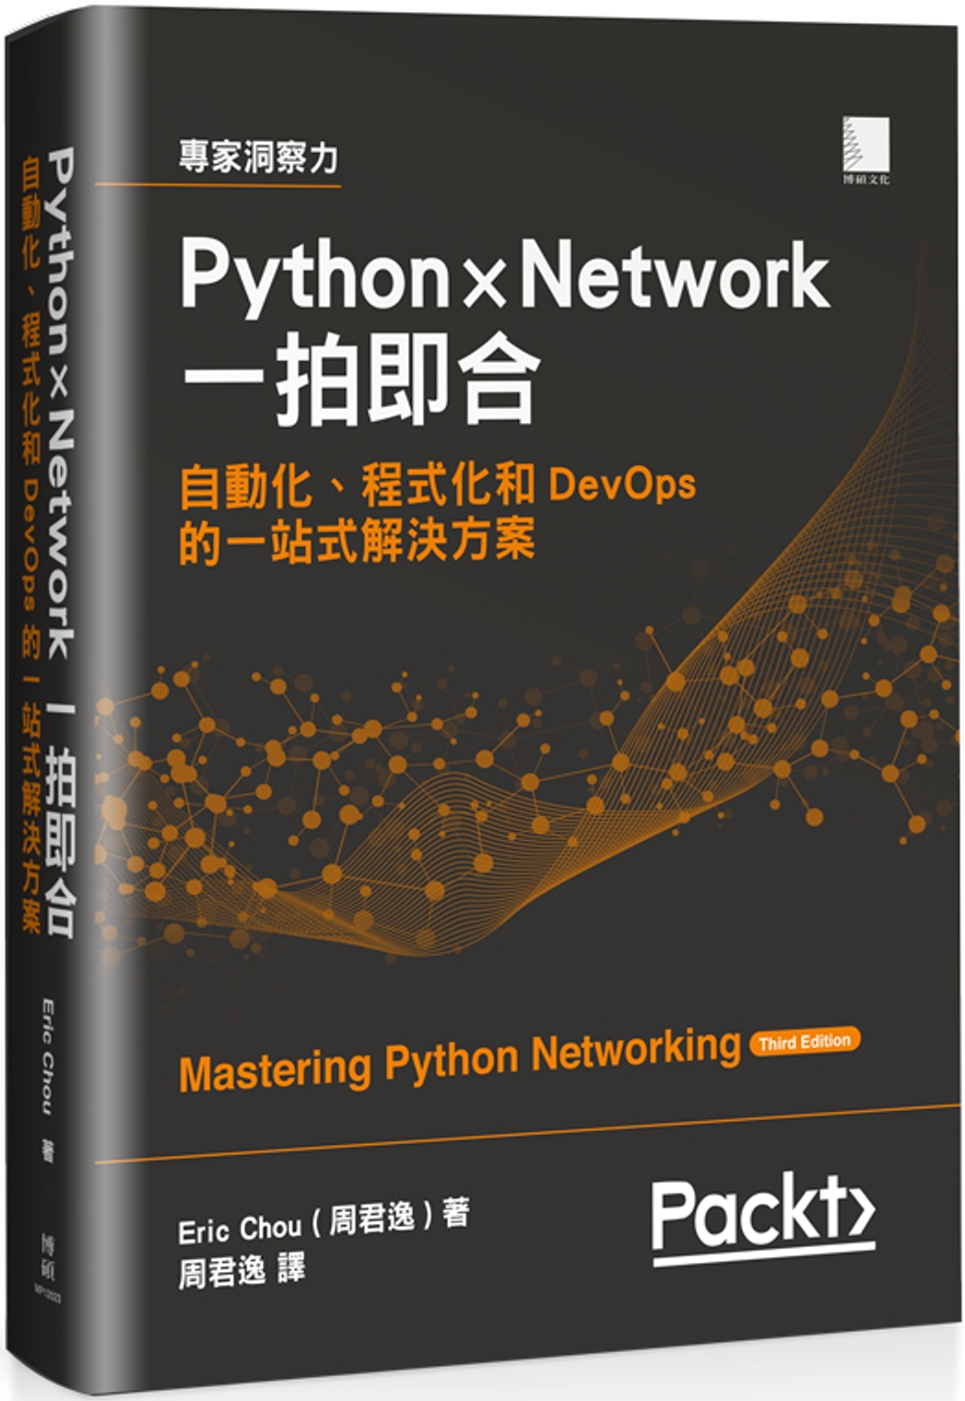 Python × Network...